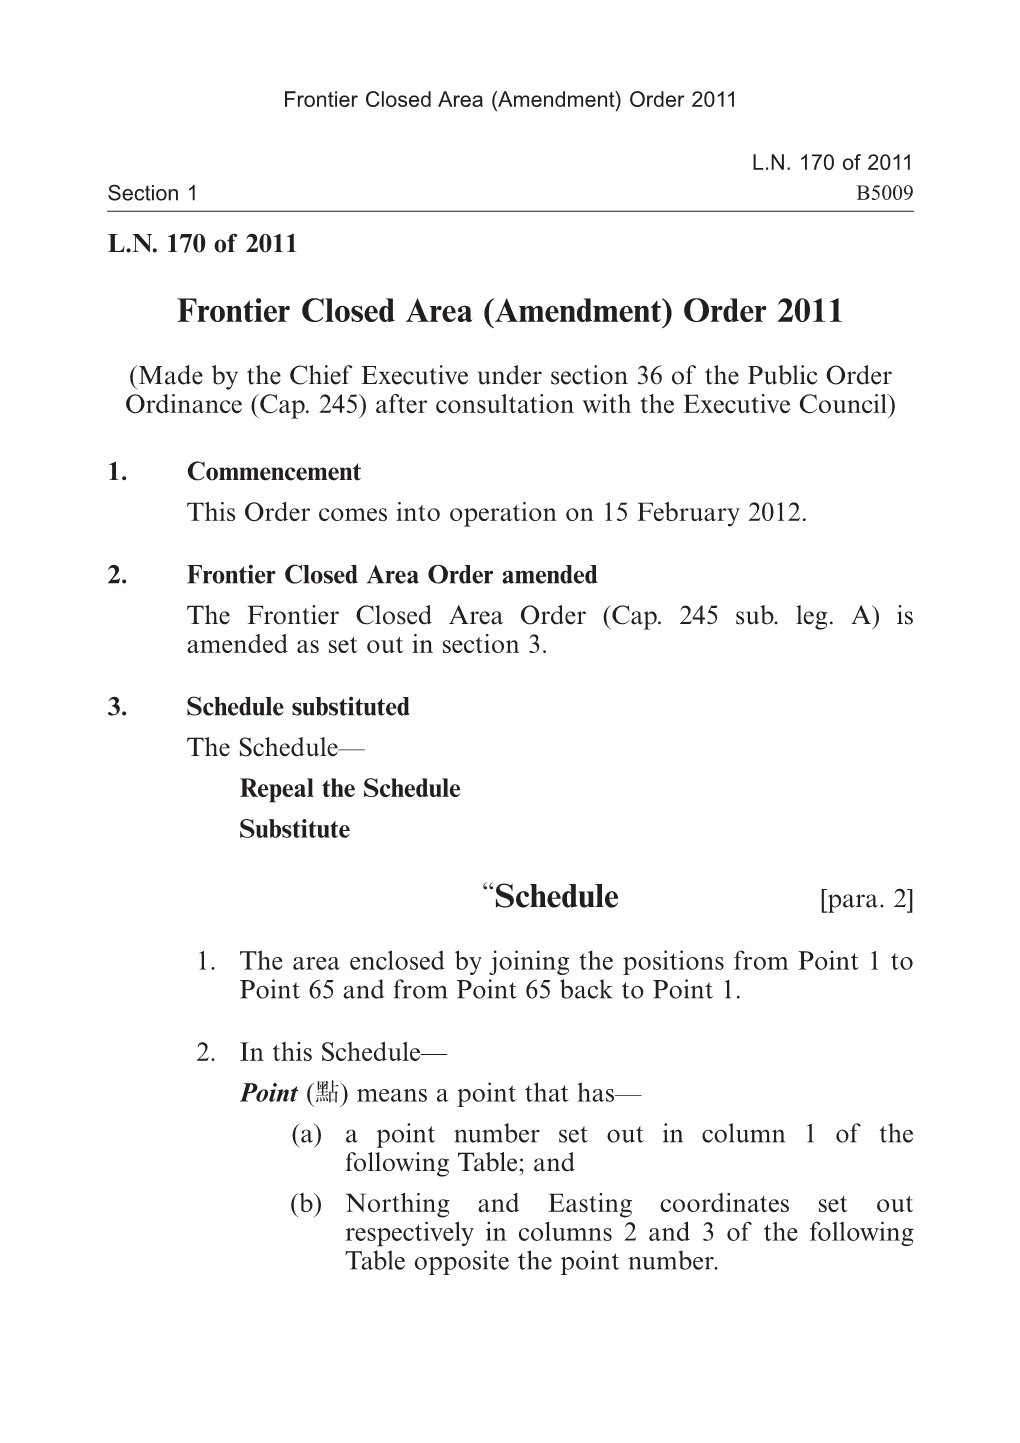 LN 170 of 2011 Frontier Closed Area (Amendment)